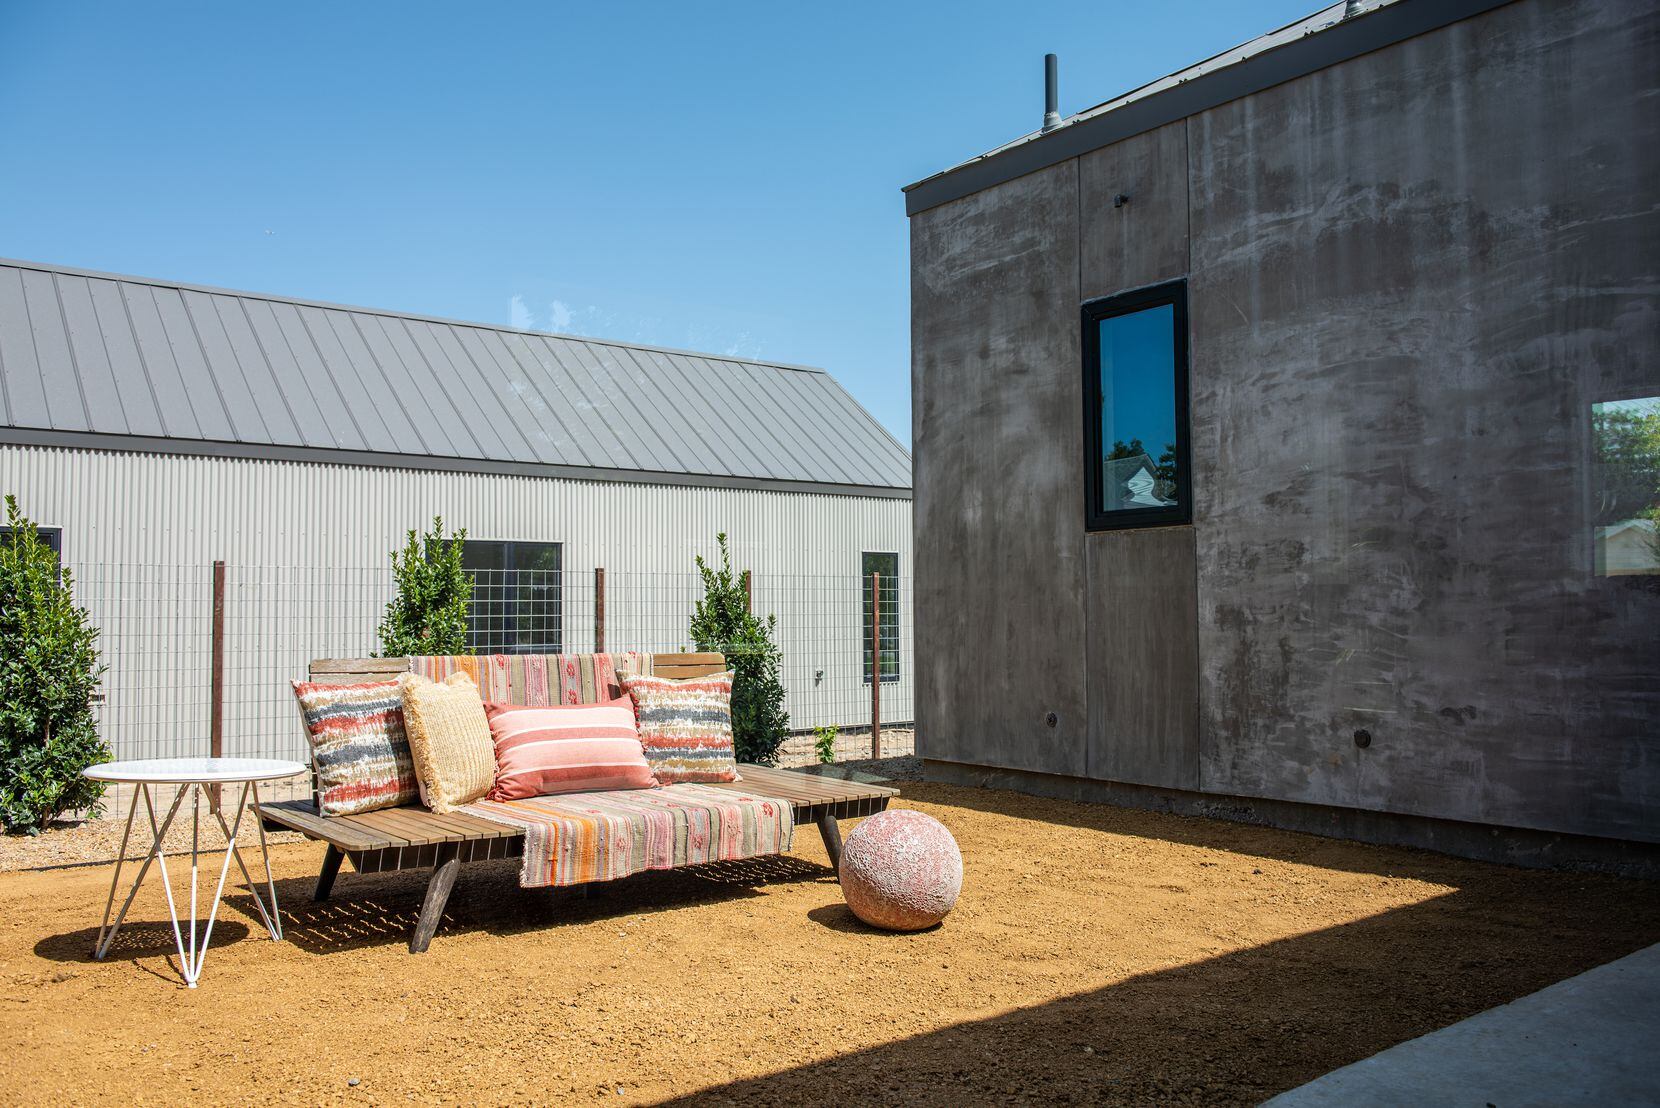 New West Dallas homes bring high design to an urban neighborhood